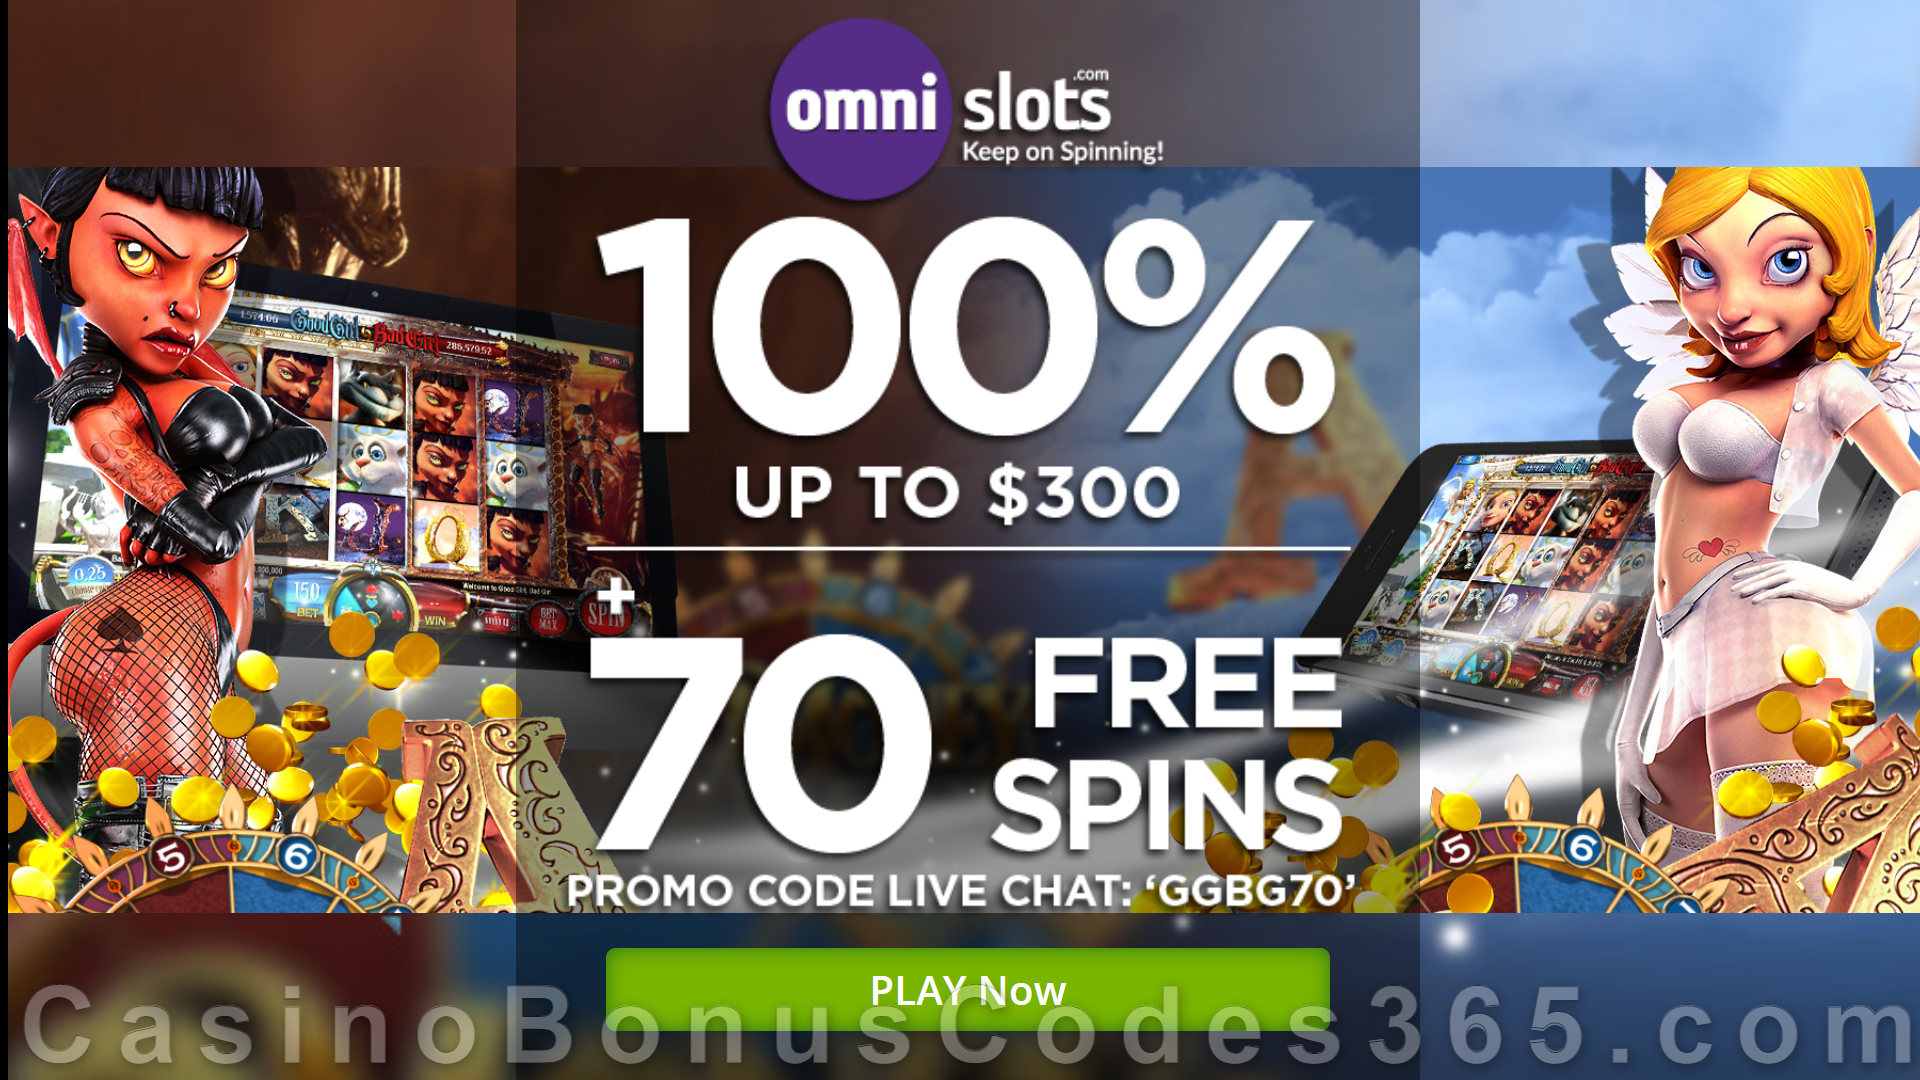 Omni slots casino no deposit bonus